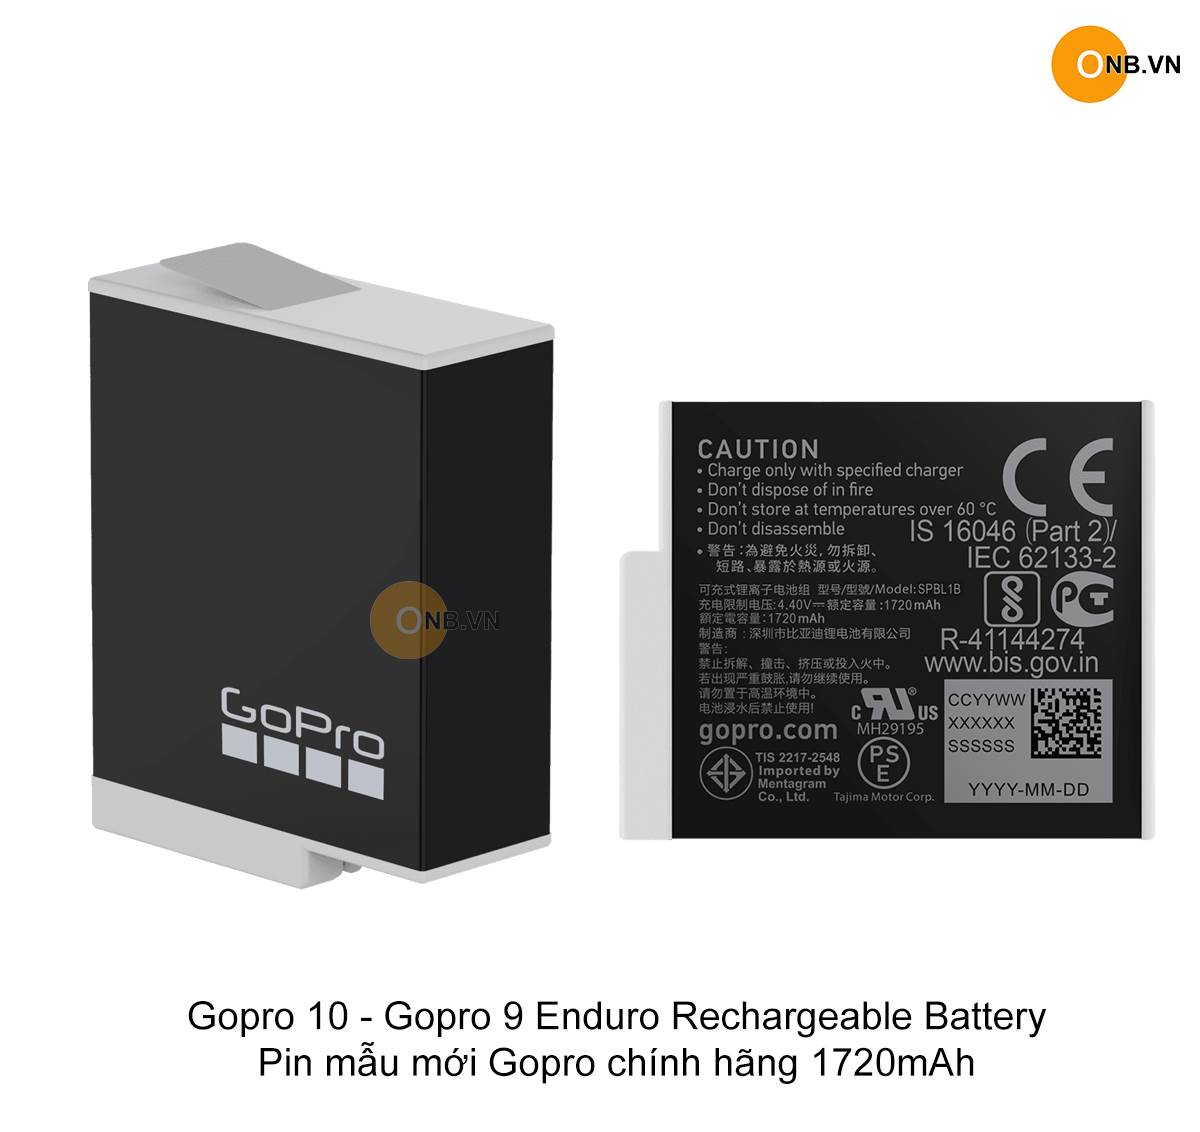 Gopro 10 Enduro Rechargeable Battery - Pin mẫu mới Gopro